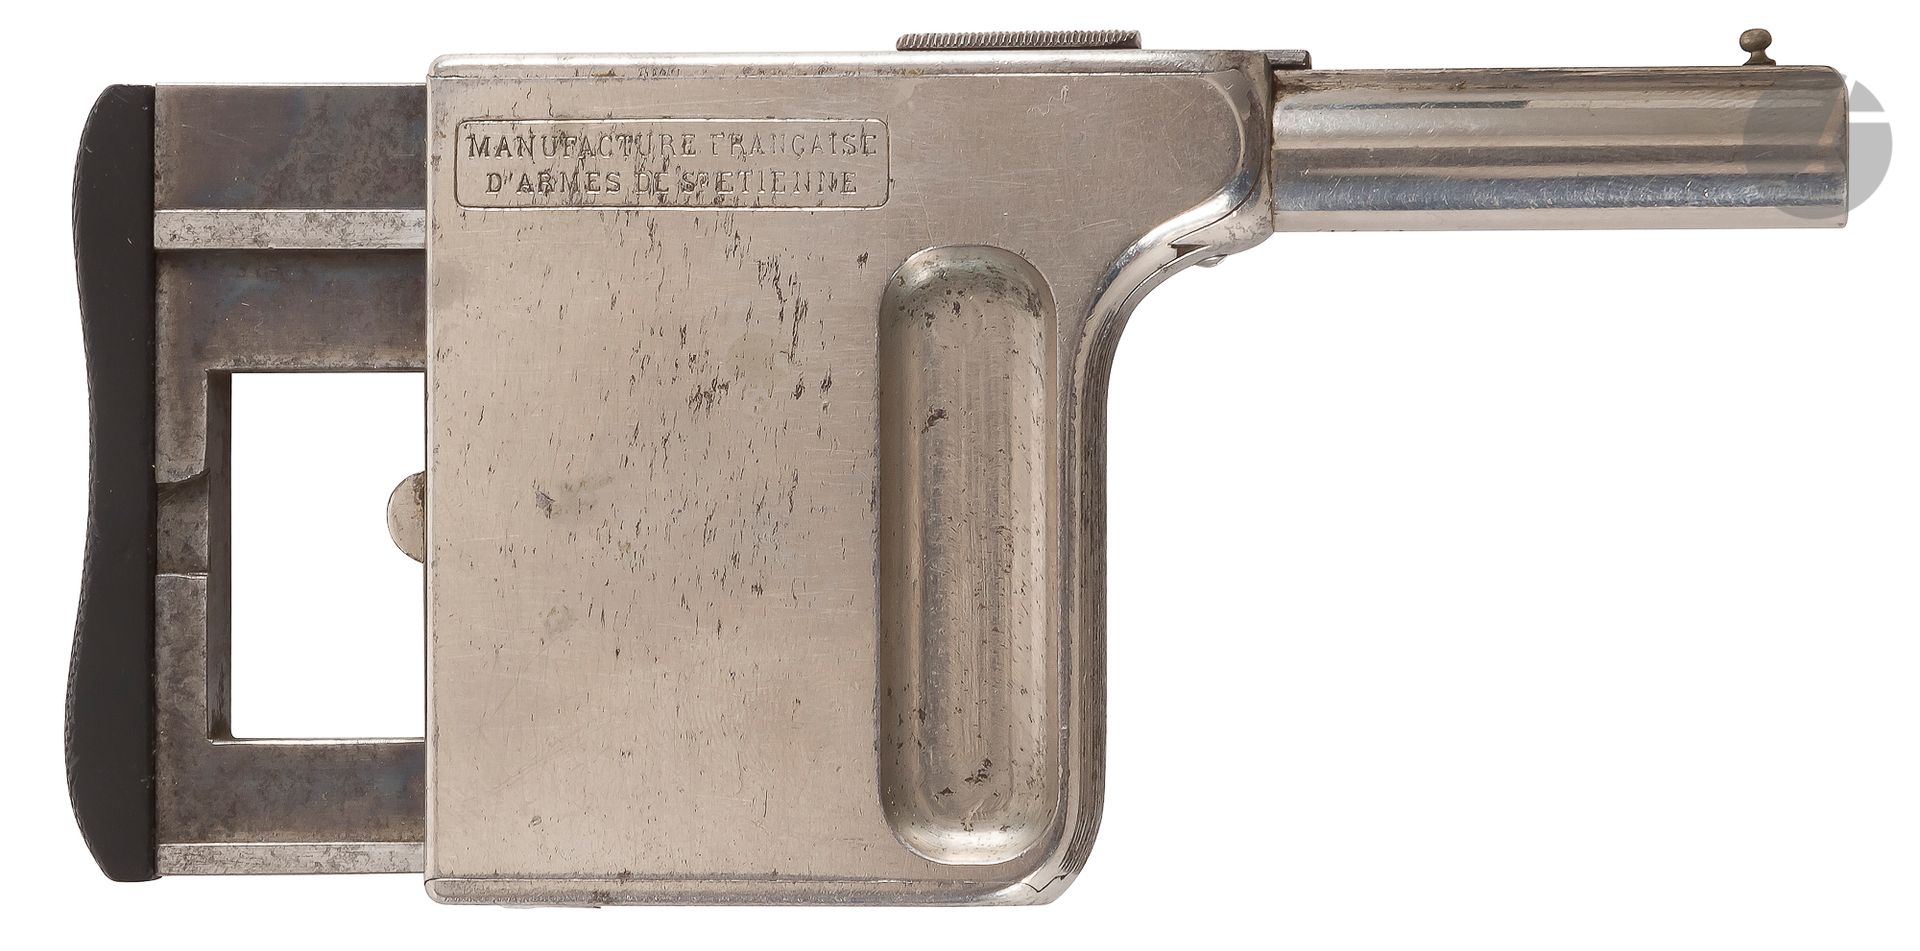 Null Handrepetierpistole "La Mitrailleuse", 5 Schuss, Kaliber 8 mm kurz.
Runder &hellip;